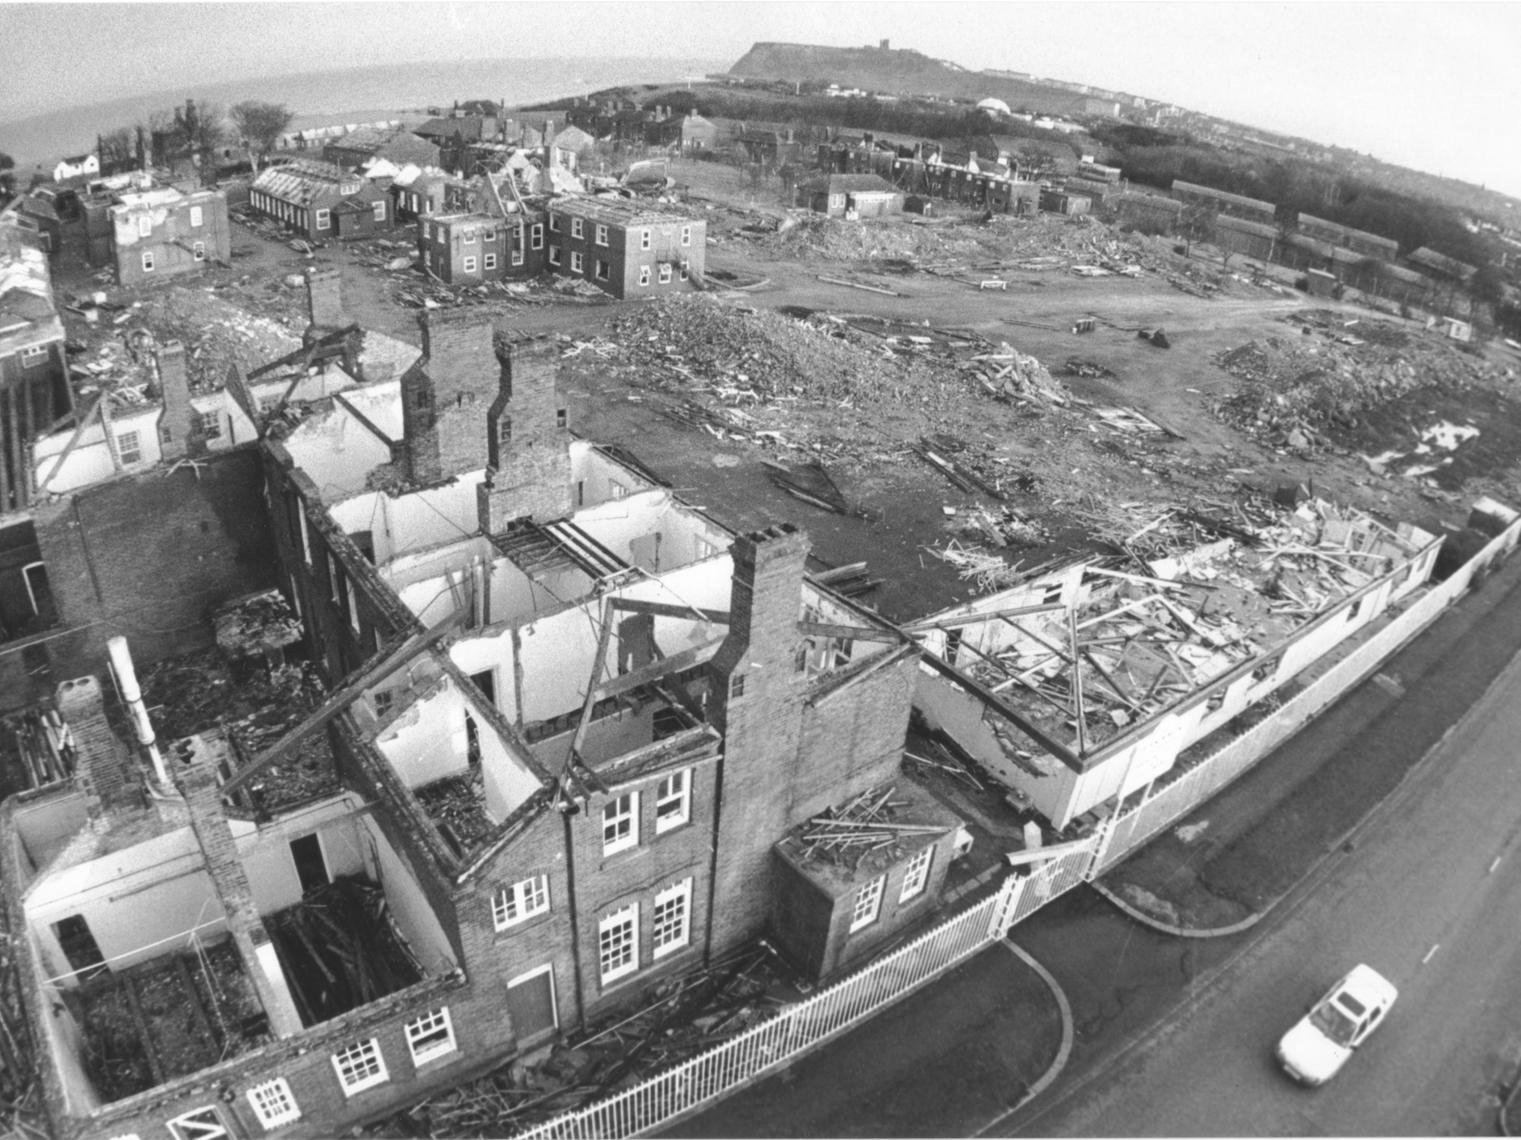 The barracks near North Bay were demolished in 1994.